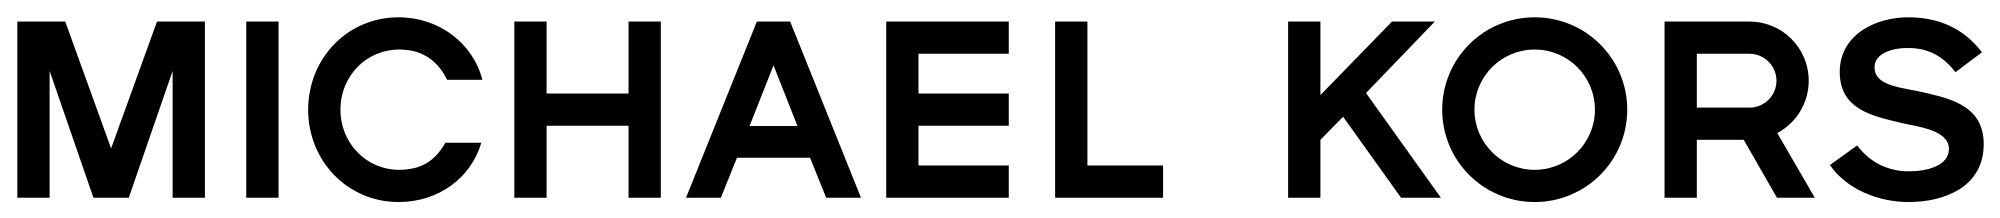 michael kors logo font